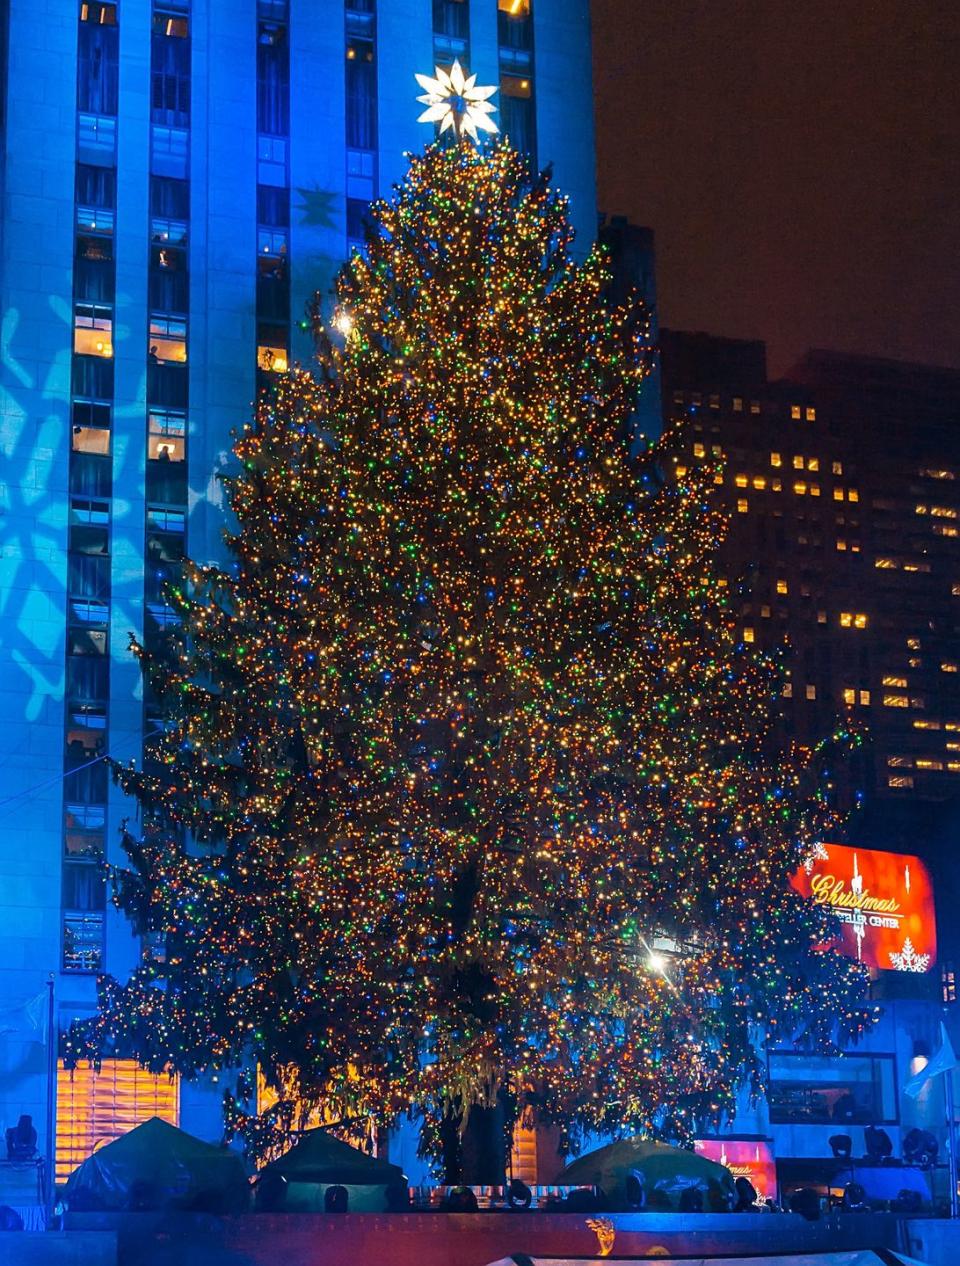 1) Visit the tree at Rockefeller Center